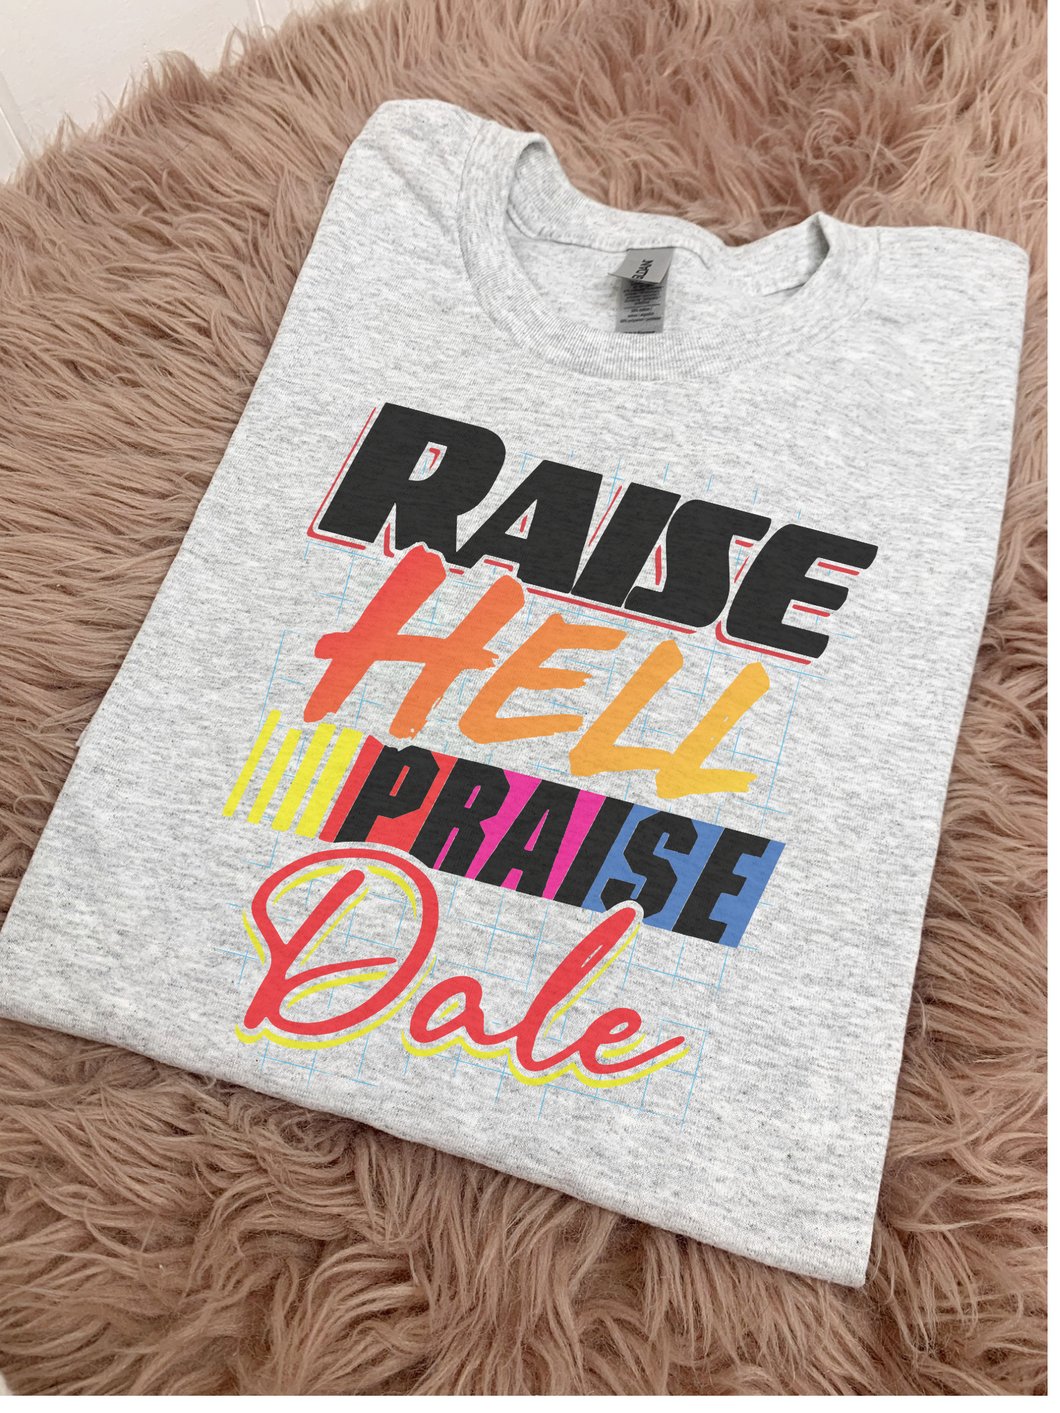 Raise Hell Praise Dale Crewneck Sweatshirt